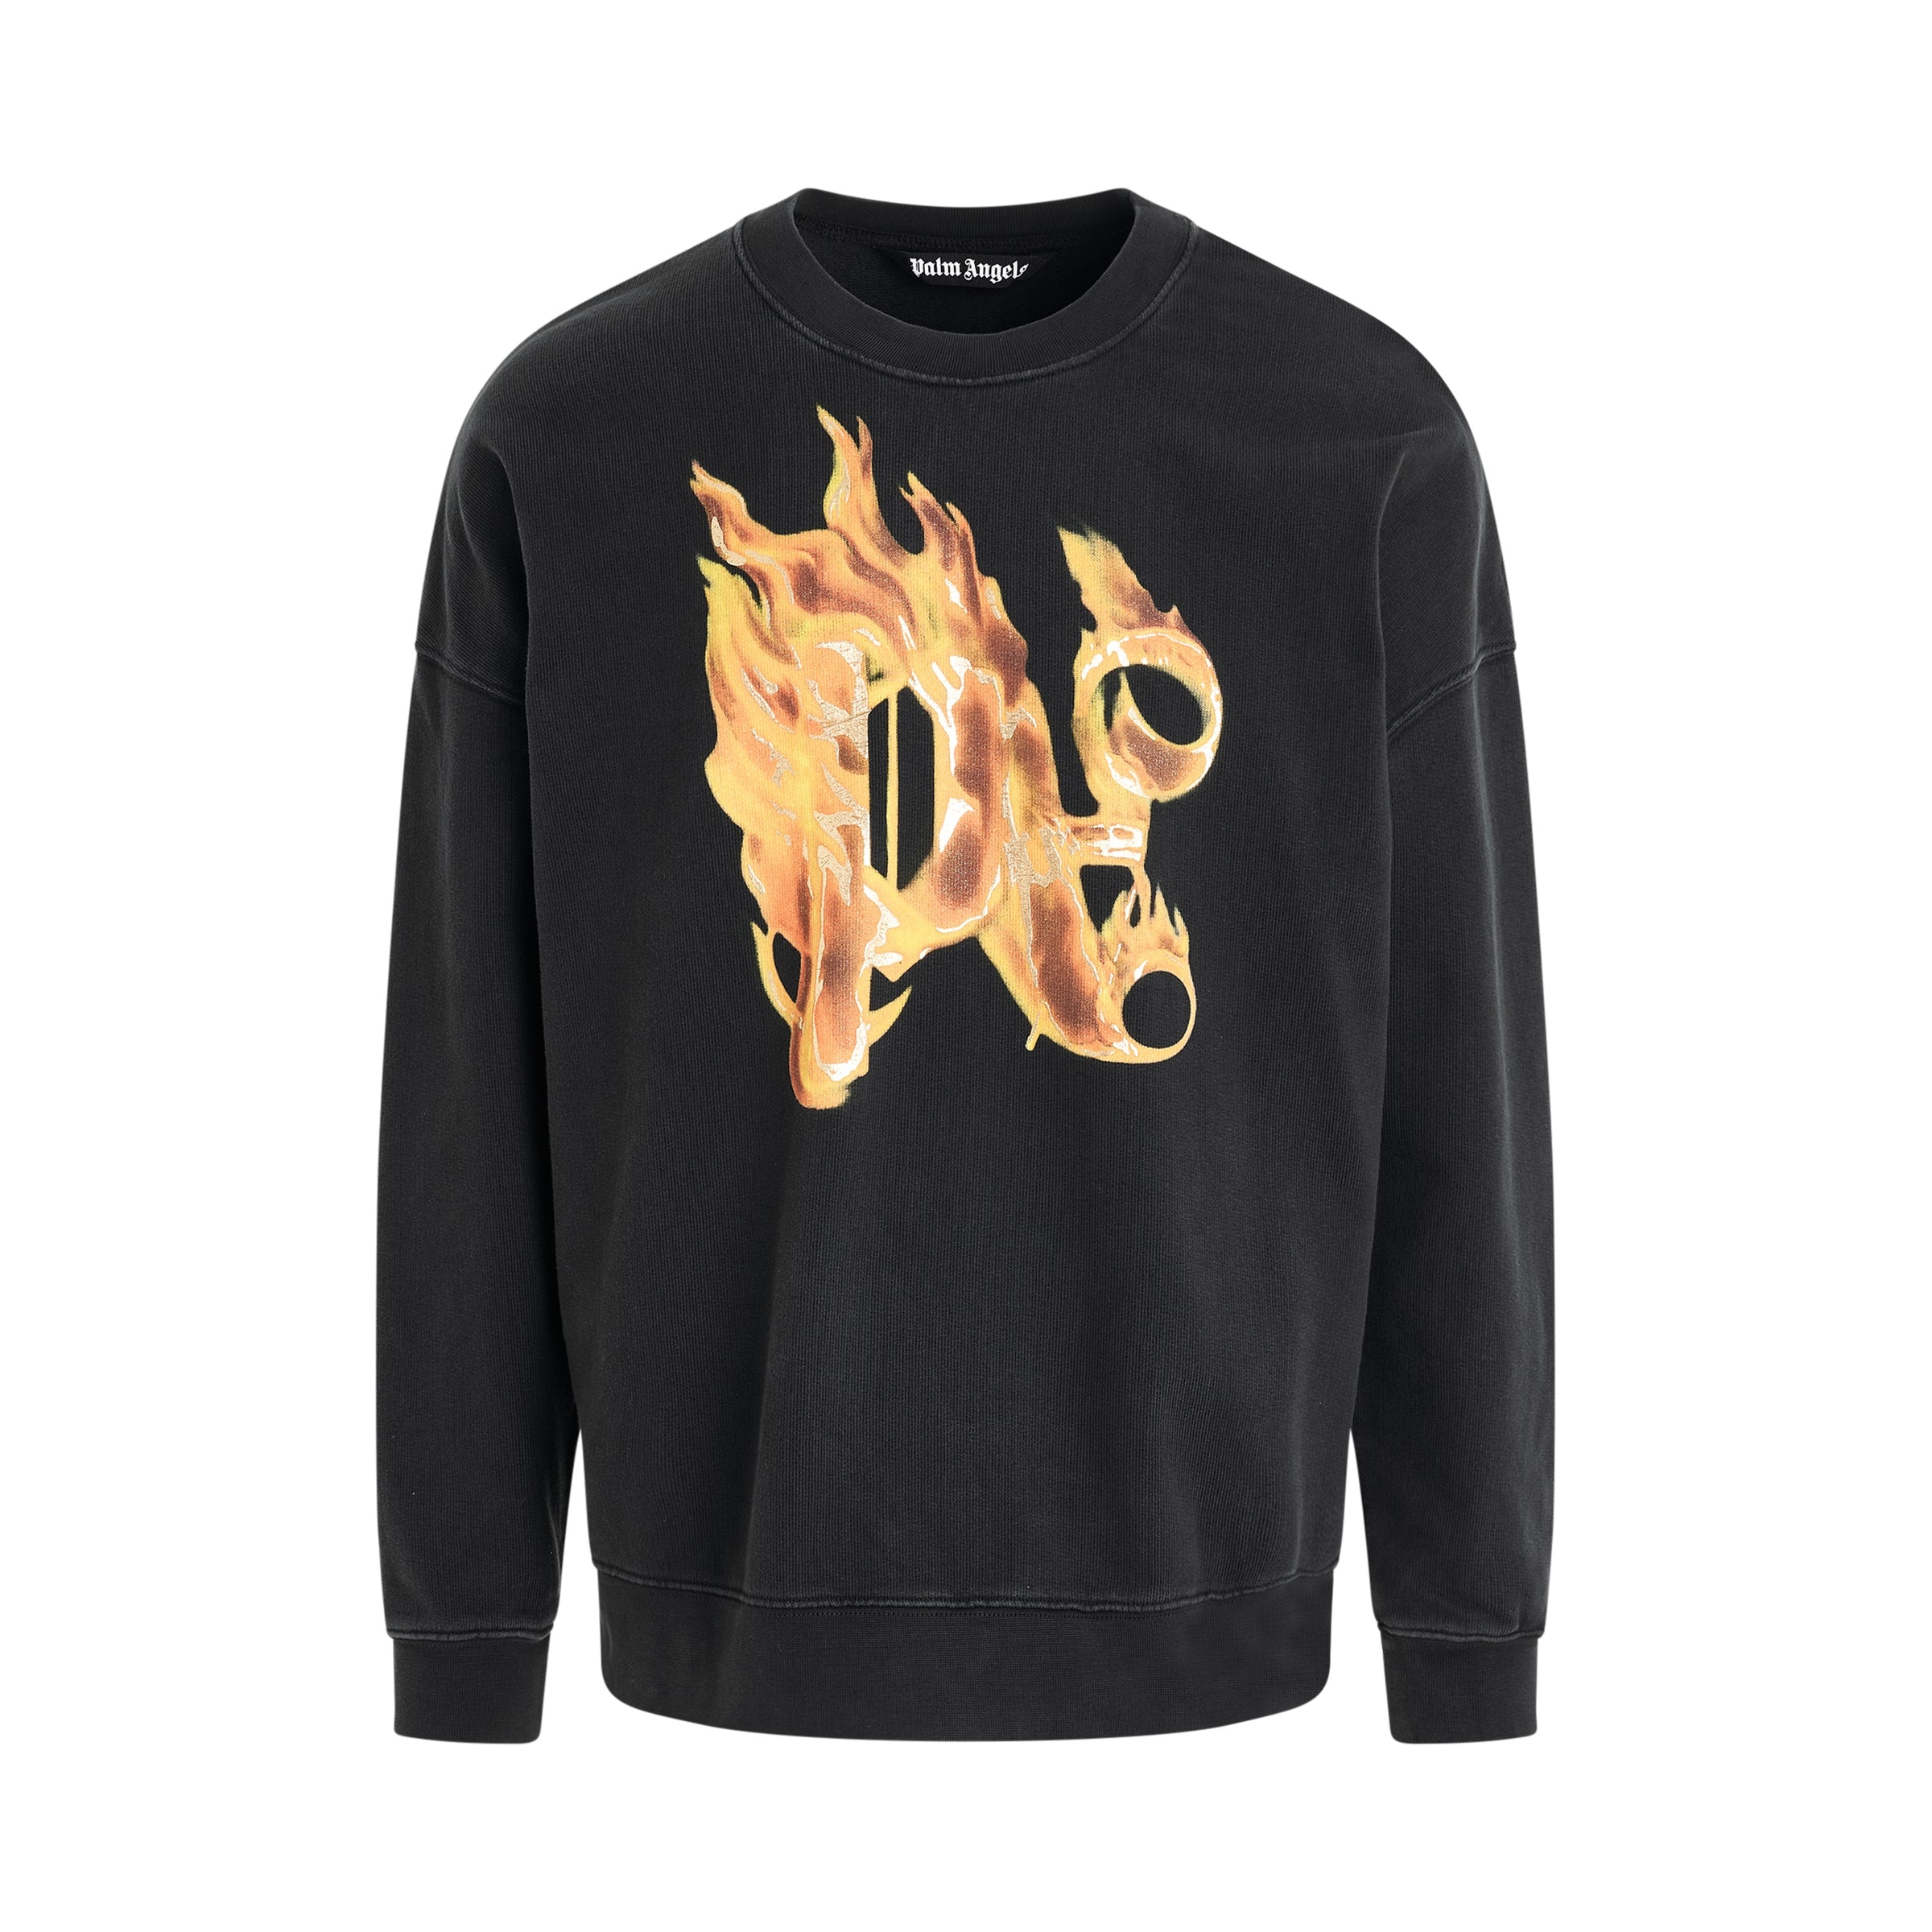 Burning Monogram Sweatshirt in Black/Gold - 1